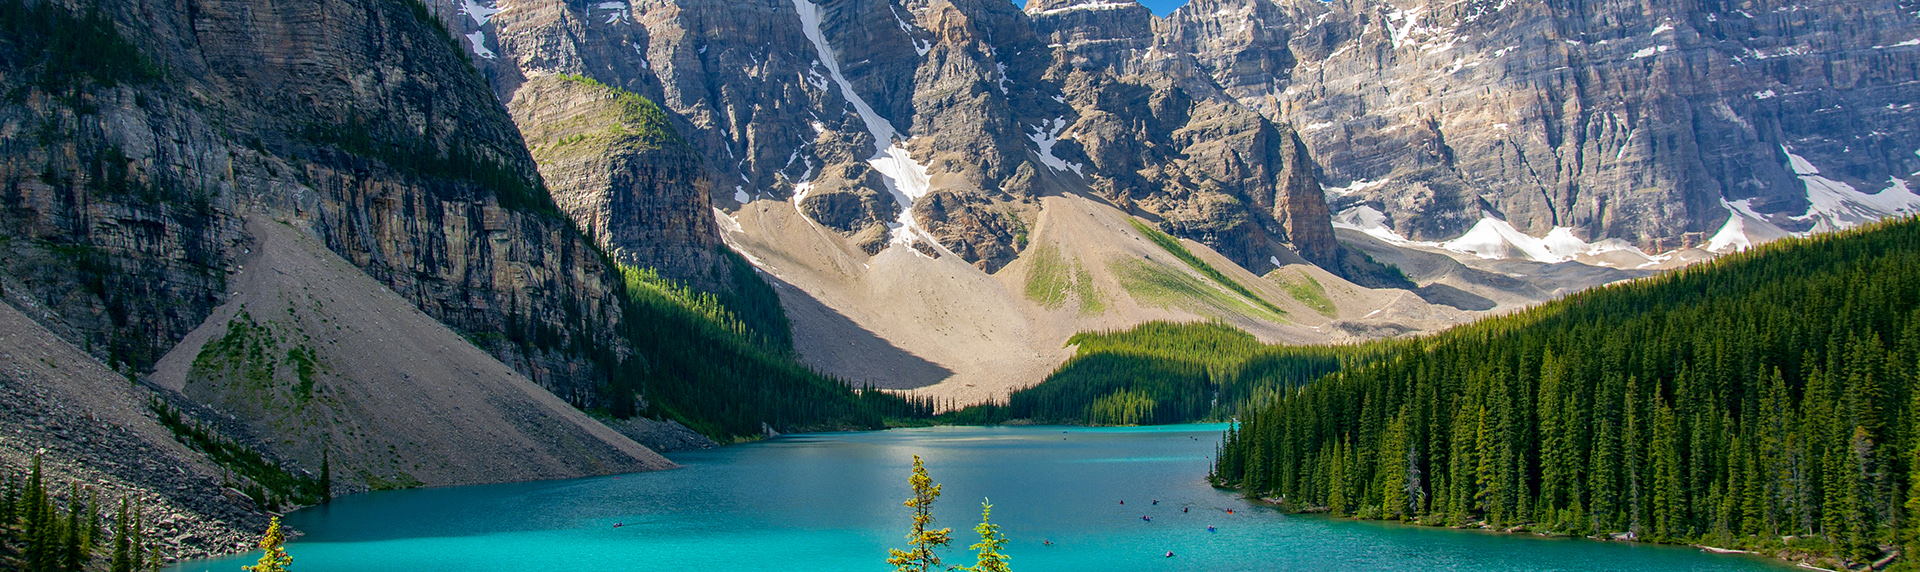 Mountains and lake near Calgary Alberta